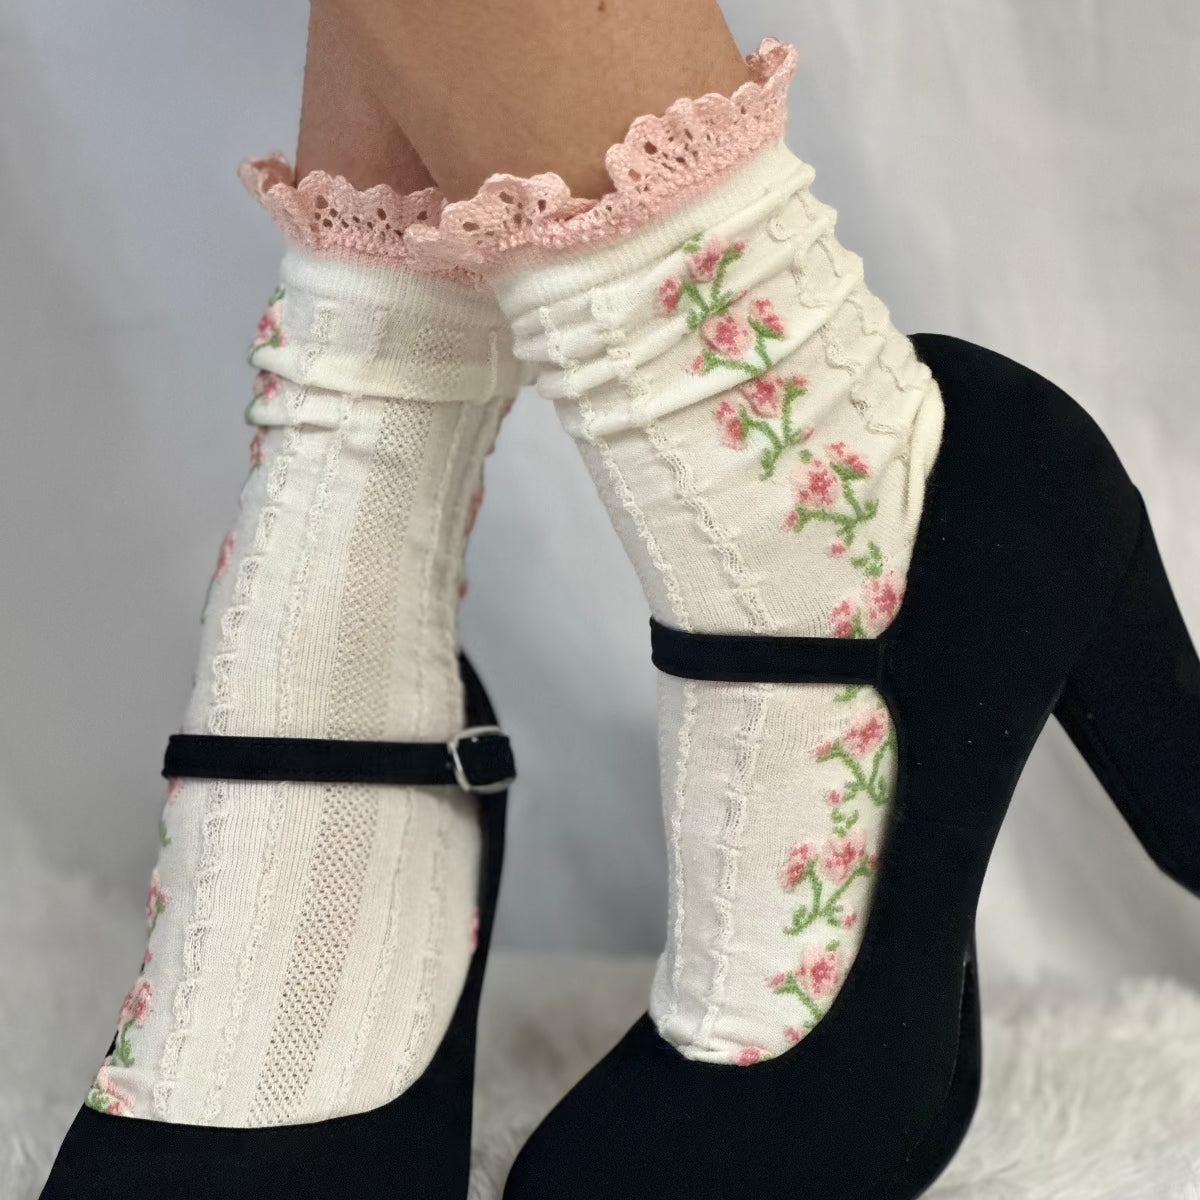 Lace socks for heels, pretty lace socks for women, Spring garden party socks ladies.